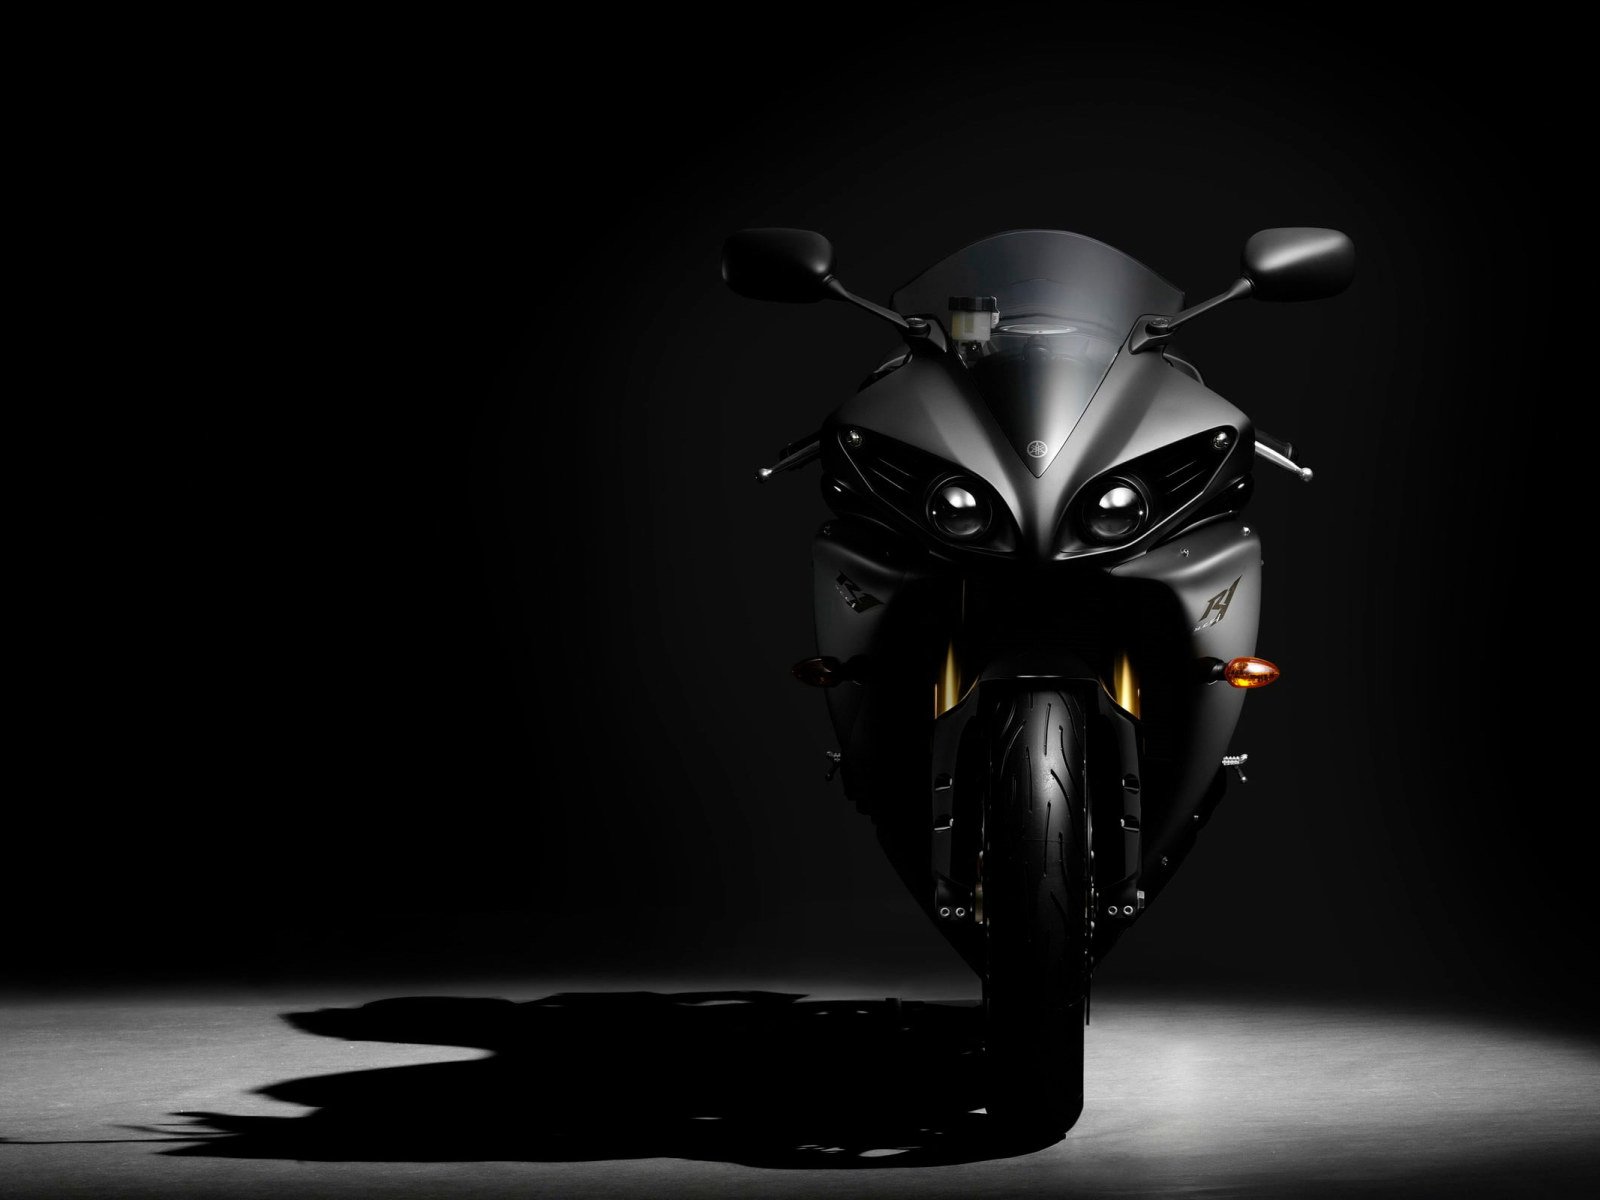 Yamaha YZF R1 HD Wallpaper, Black Sport Motorcycle, Bikes, Motorcycles • Wallpaper For You